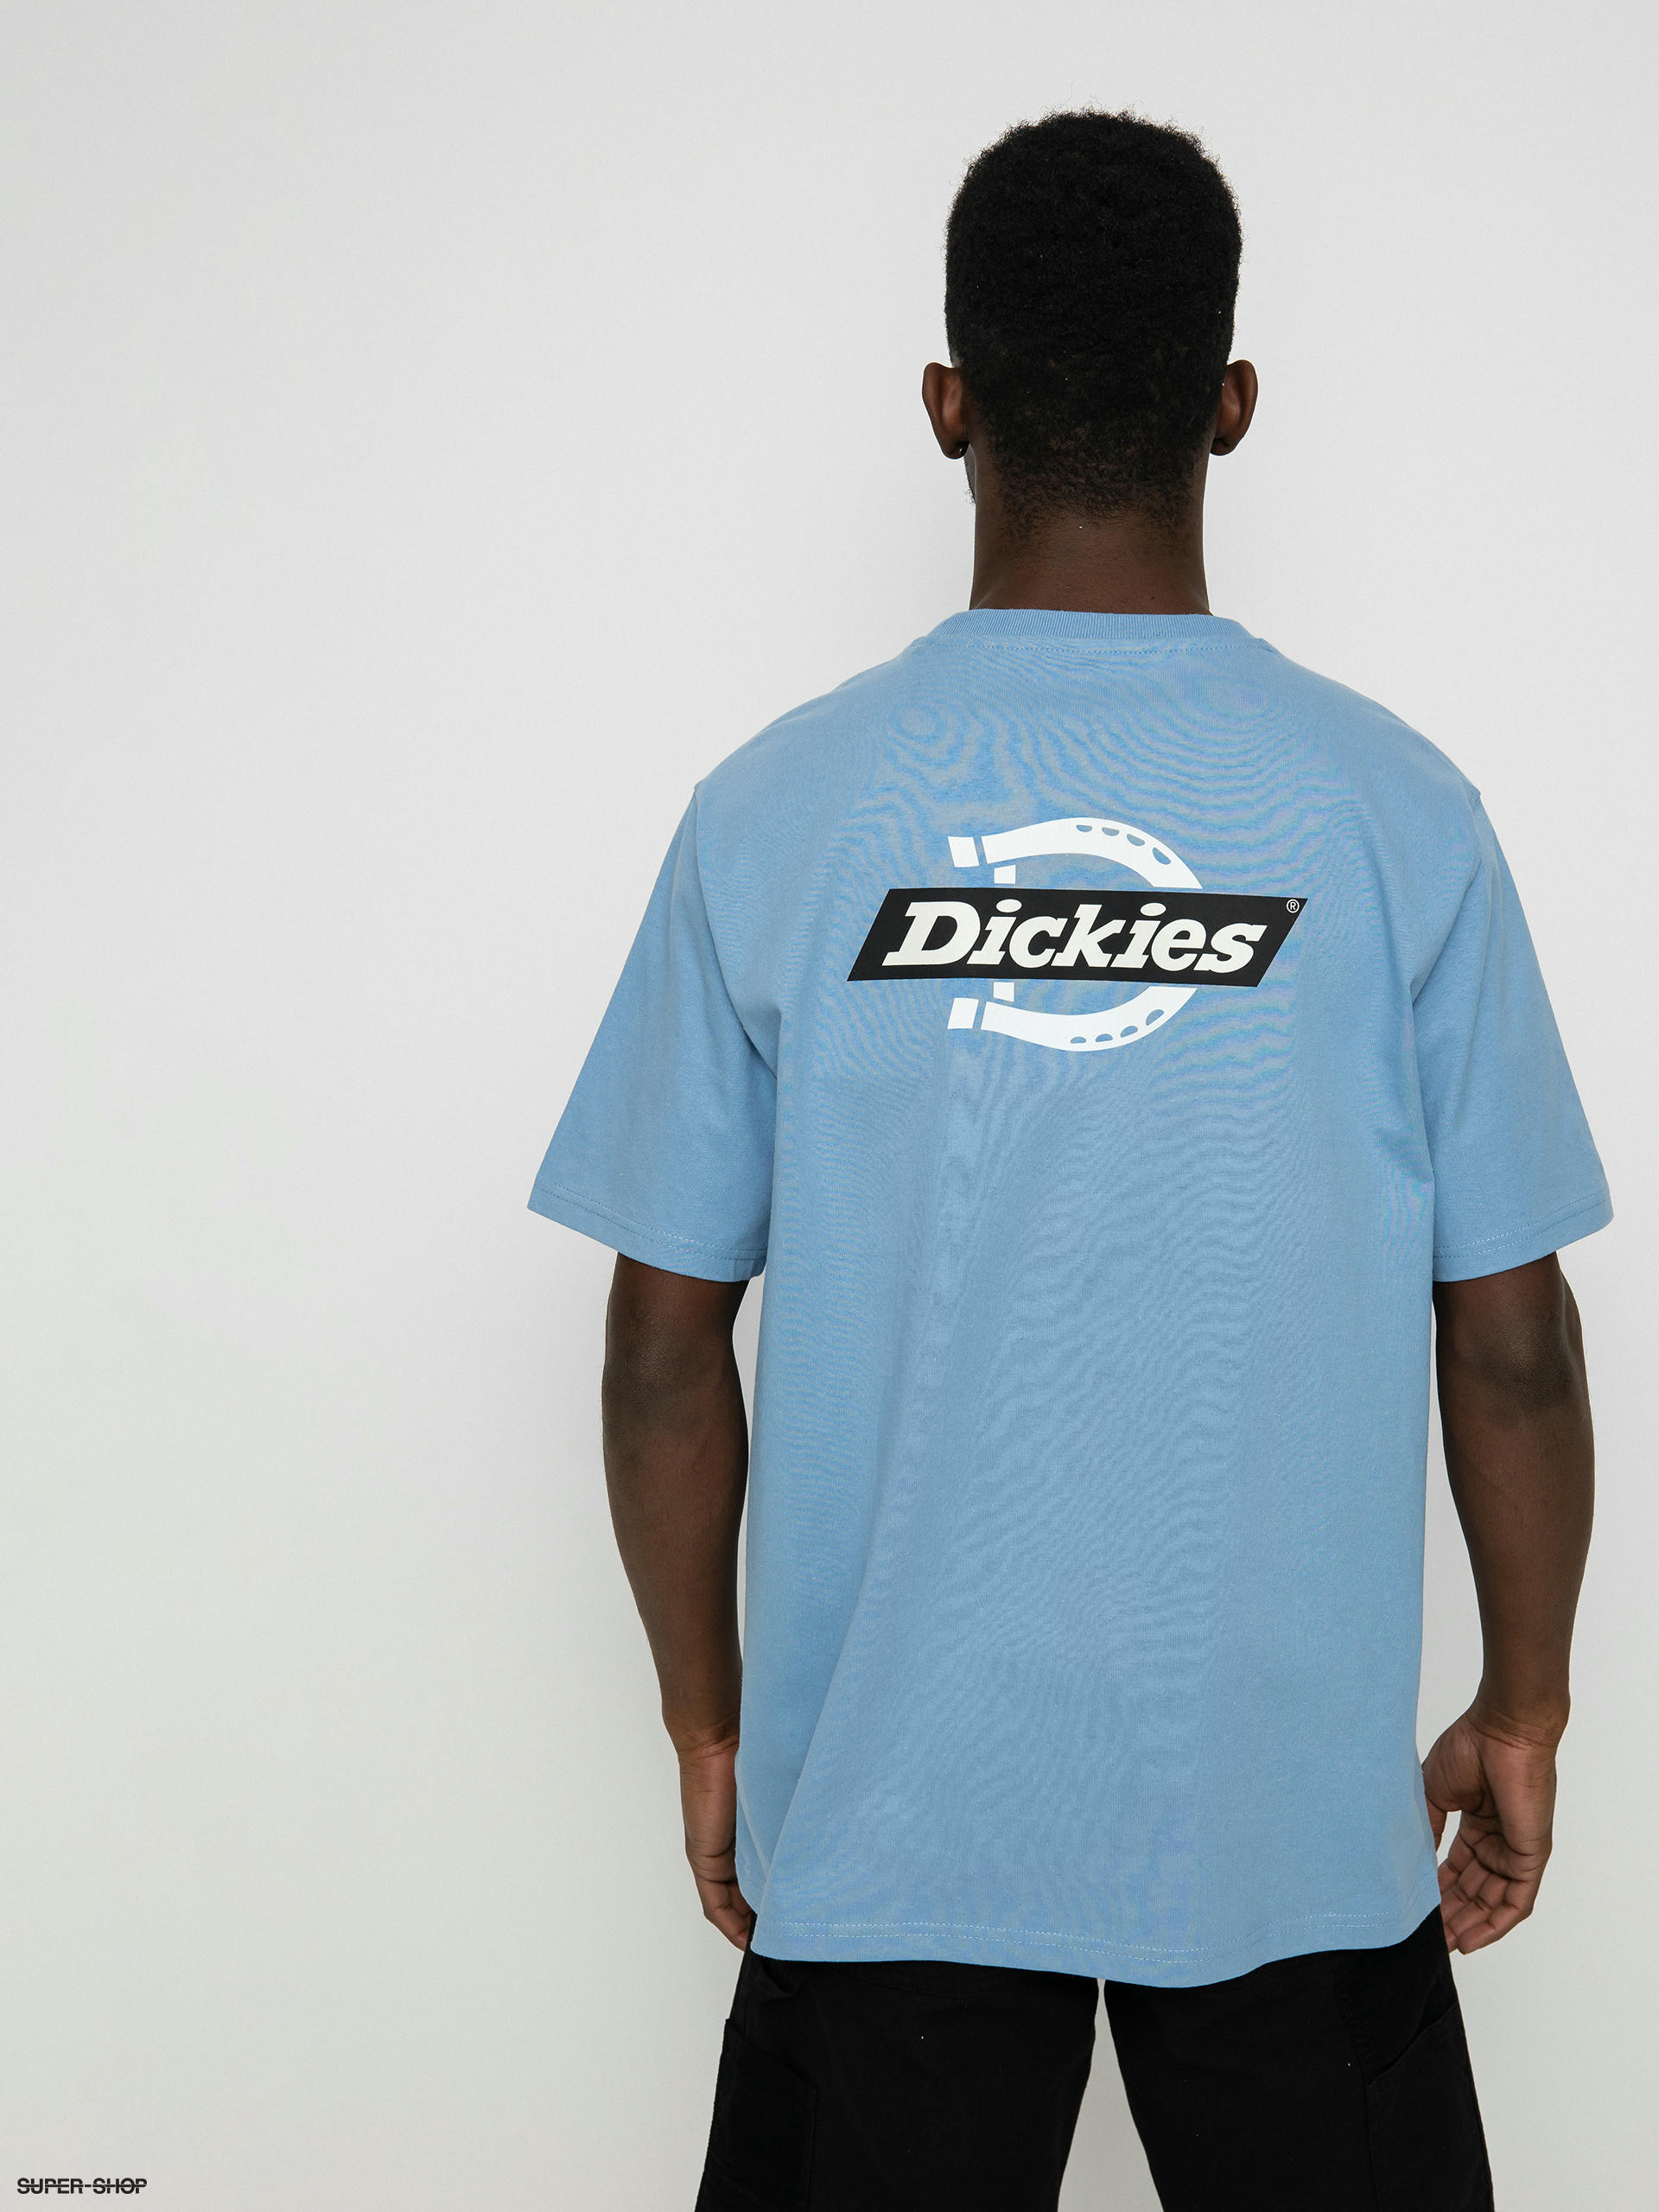 Details - Dickies Ruston T-shirt (allure)